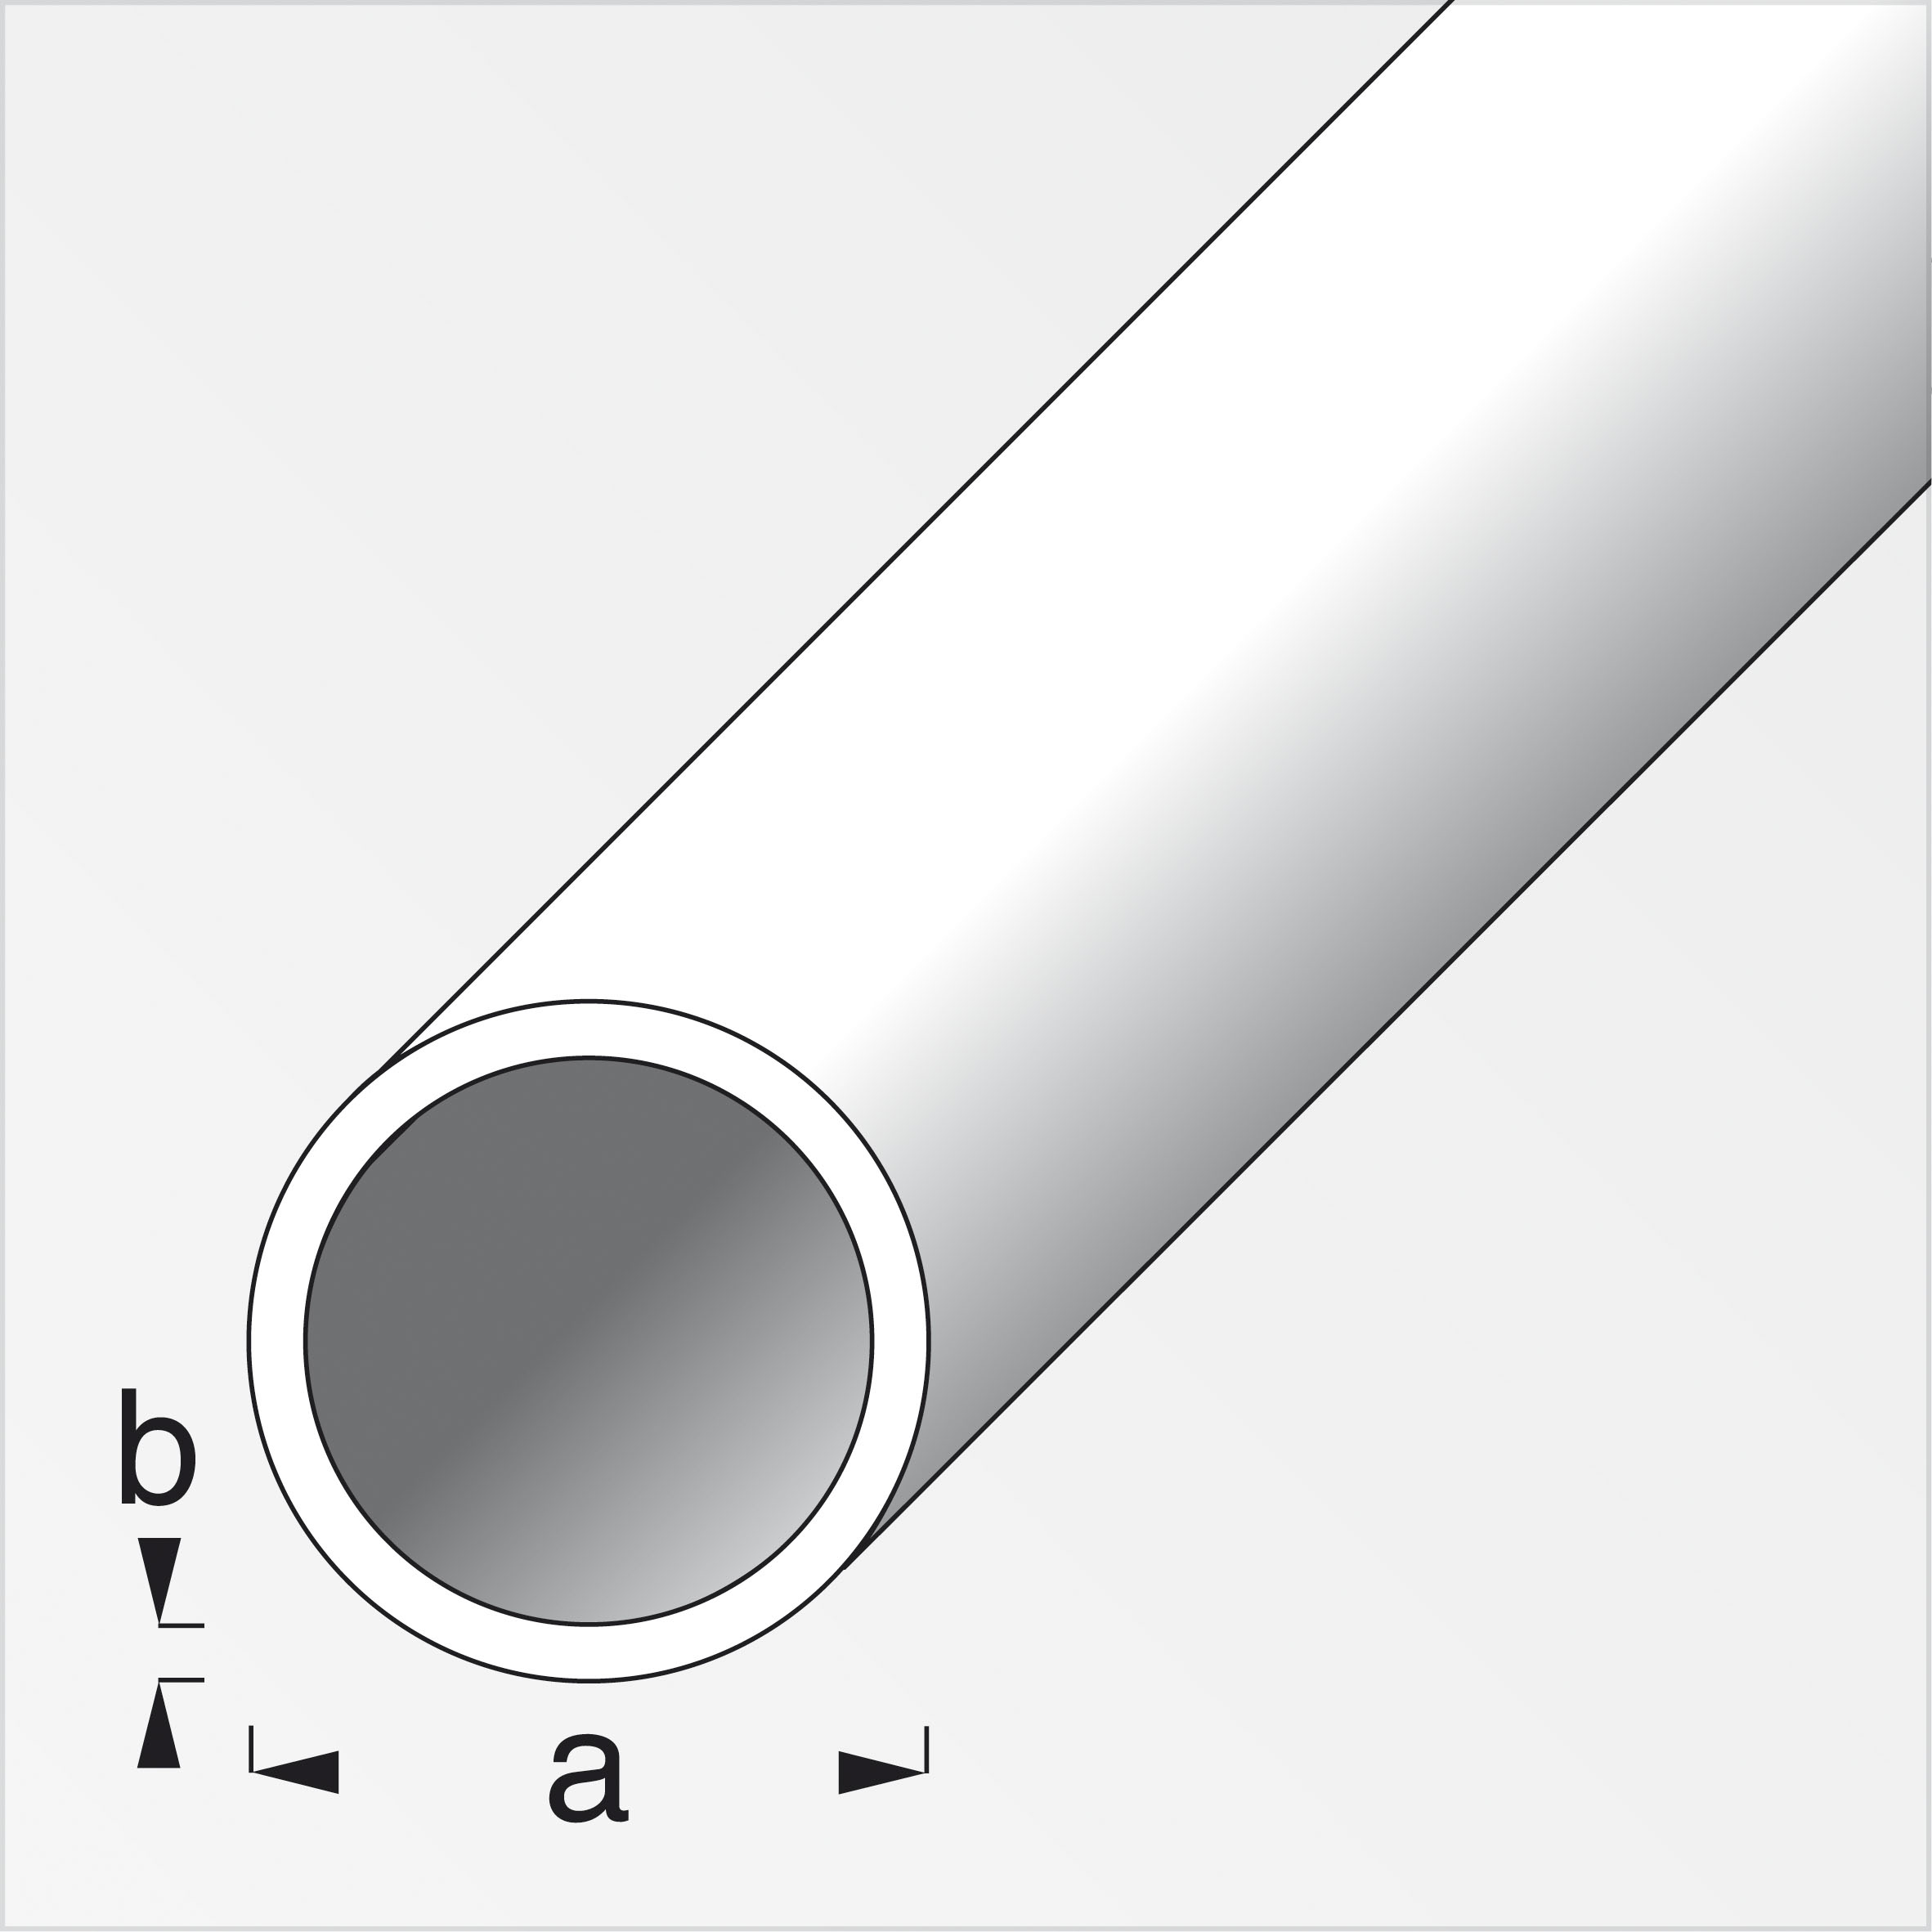 alfer® Rundrohr Stahl kaltgewalzt, Stahlgrau 1 m, 10 × 1 mm